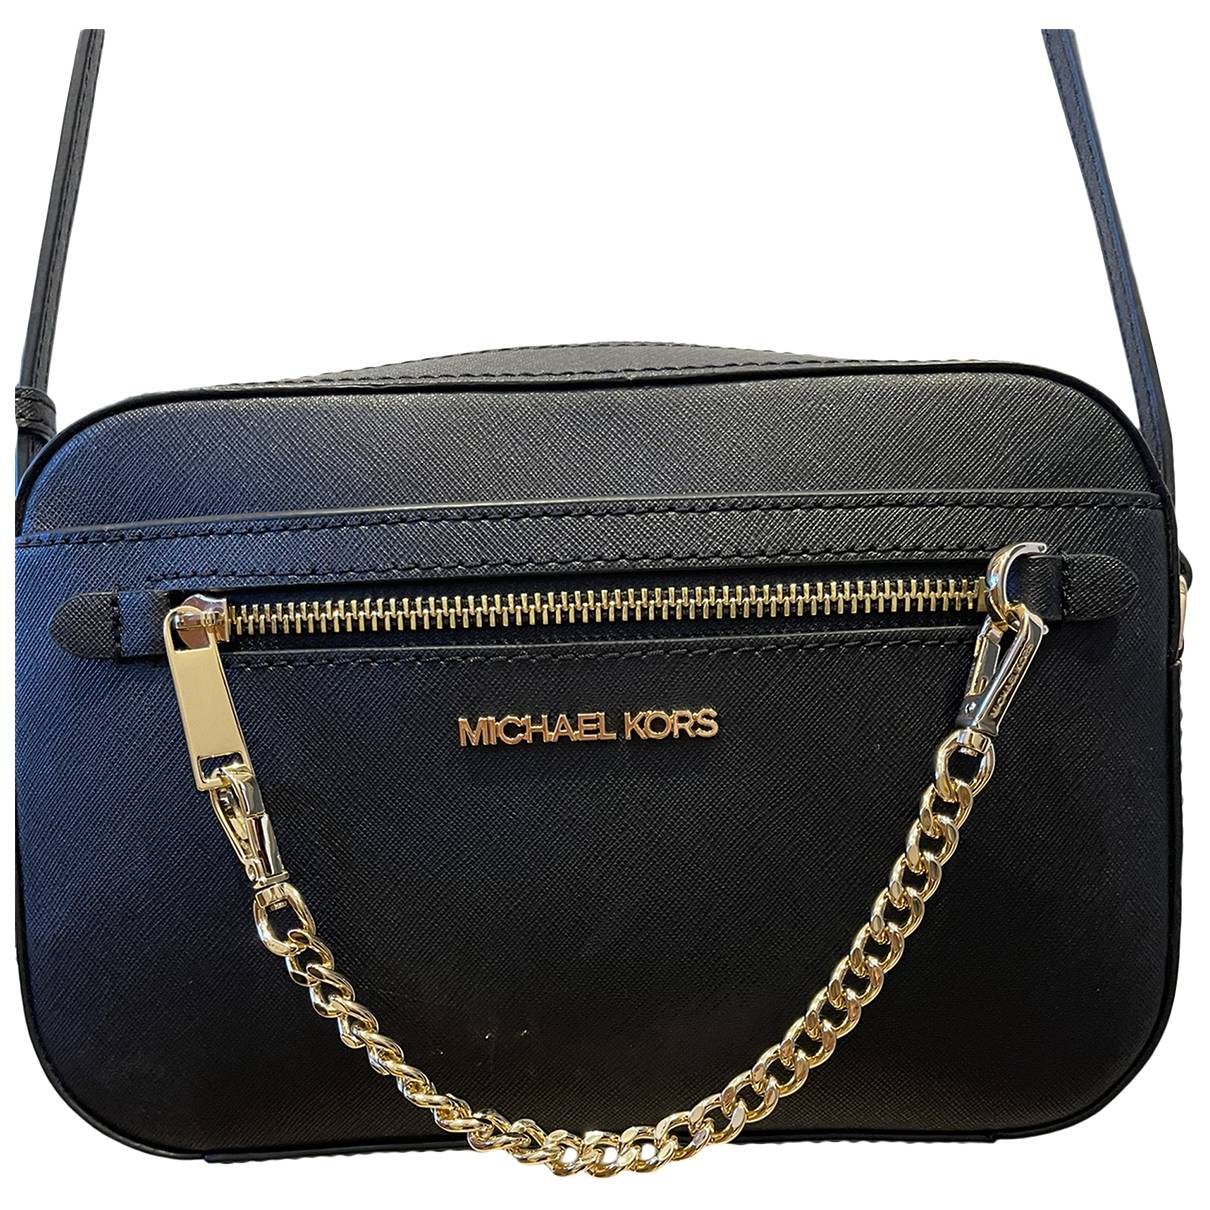 Michael Kors Cross-Body Bags, Black Black: Handbags